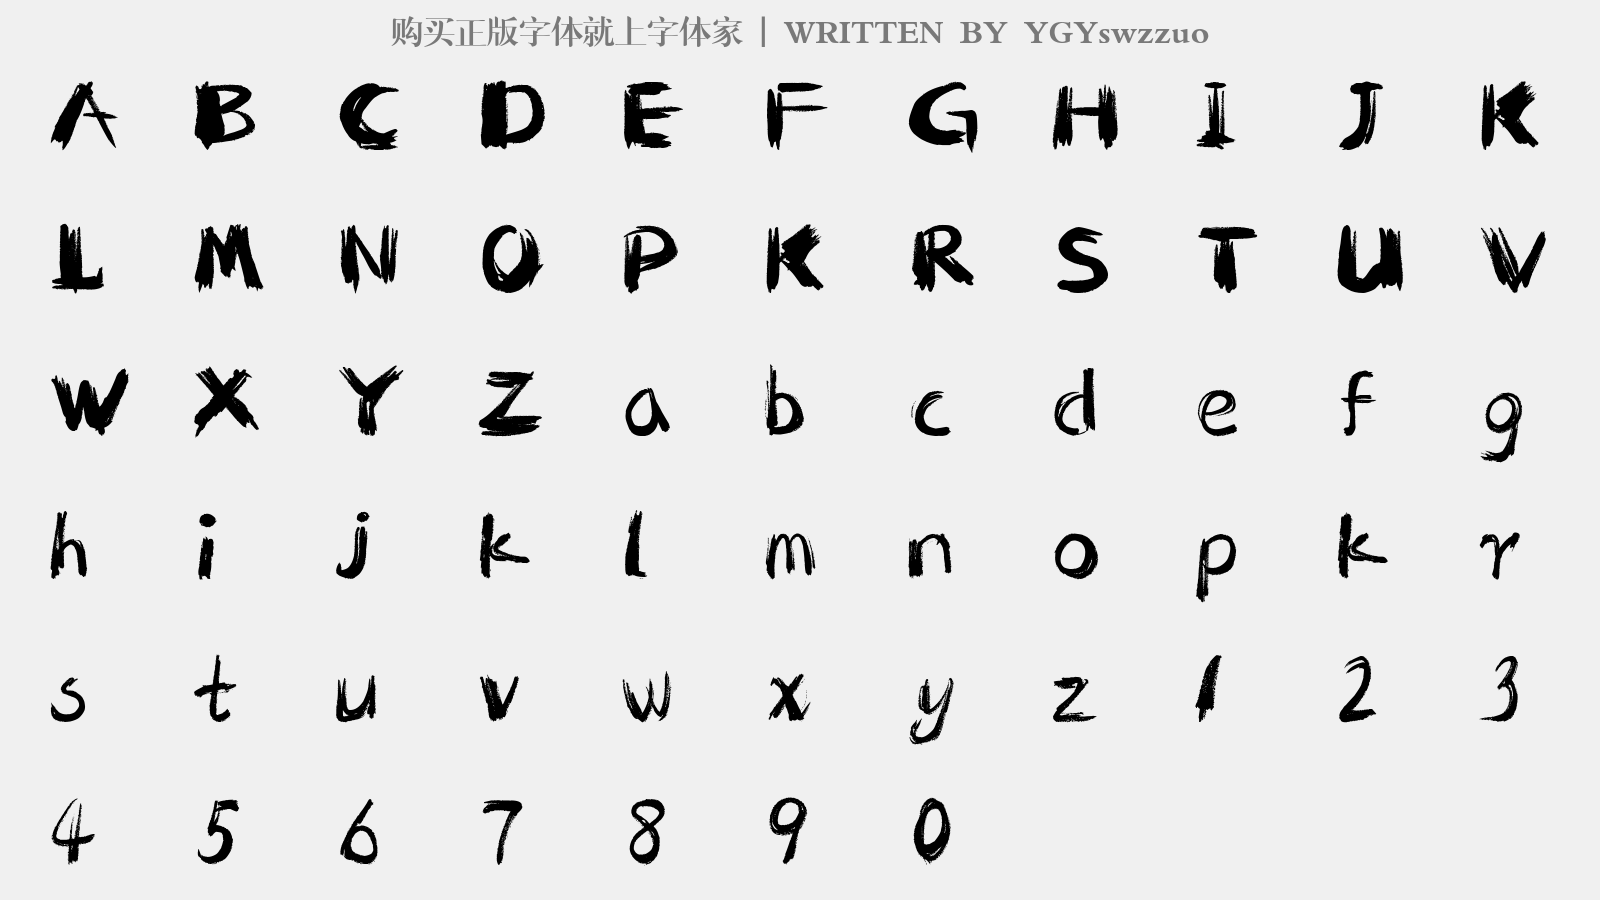 YGYswzzuo - 大写字母/小写字母/数字